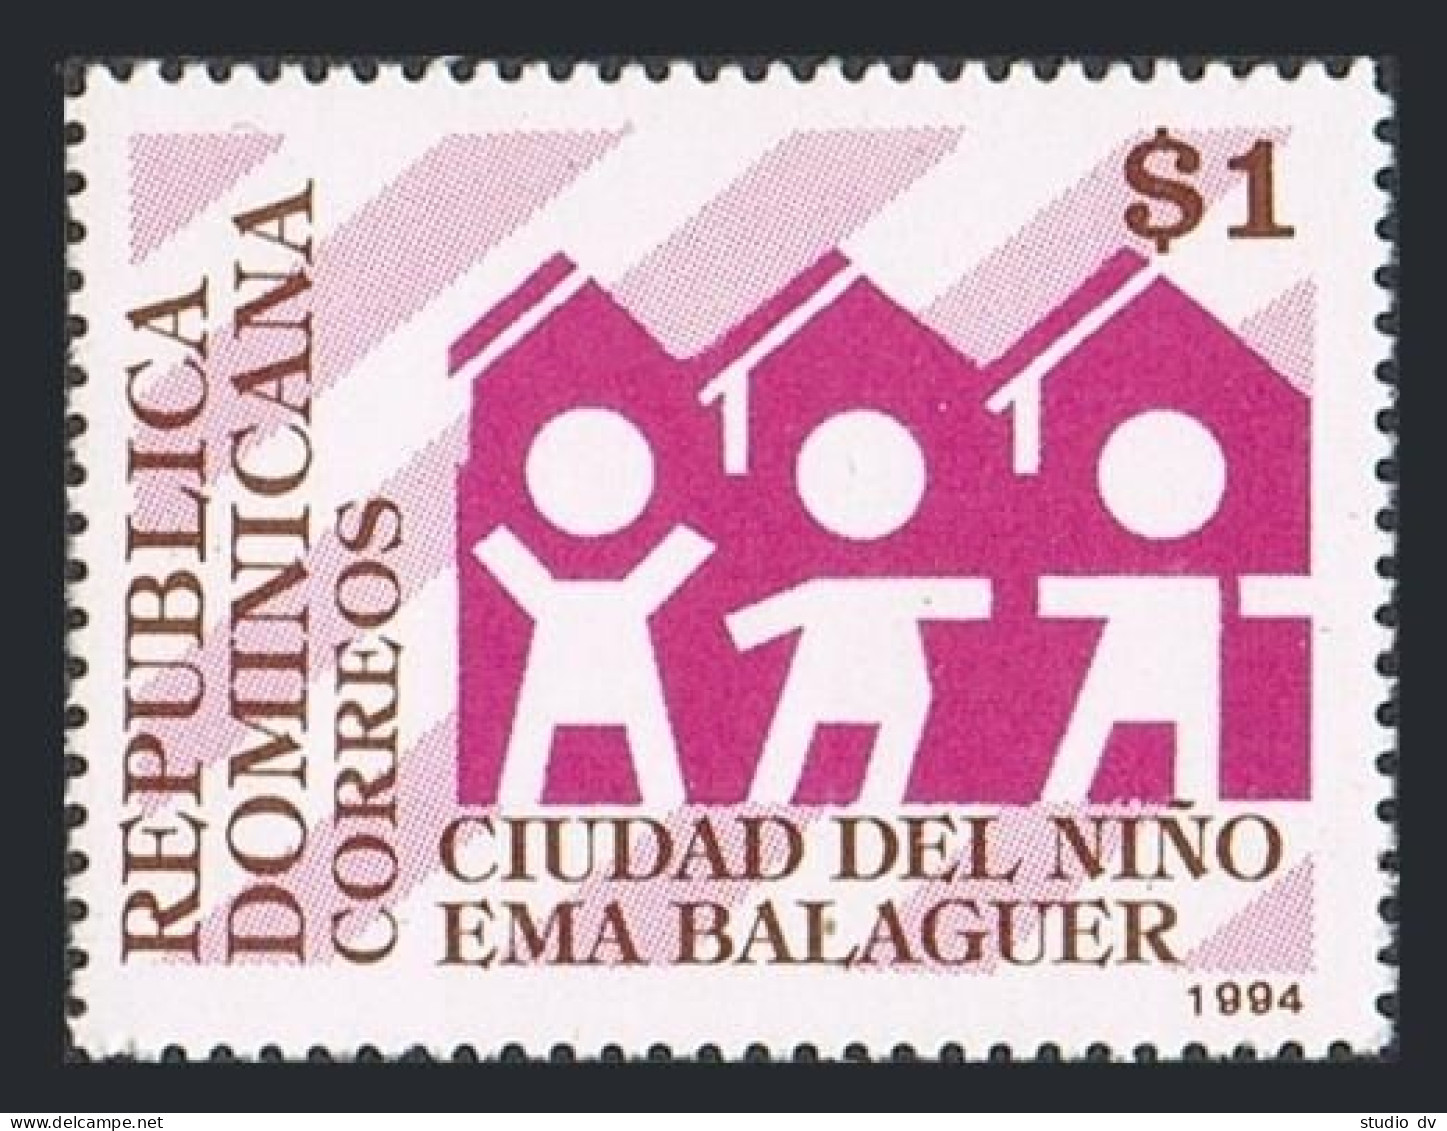 Dominican Rep 1165,MNH.Michel 1708. Ema Balaguer City Of Children,1994. - Dominica (1978-...)